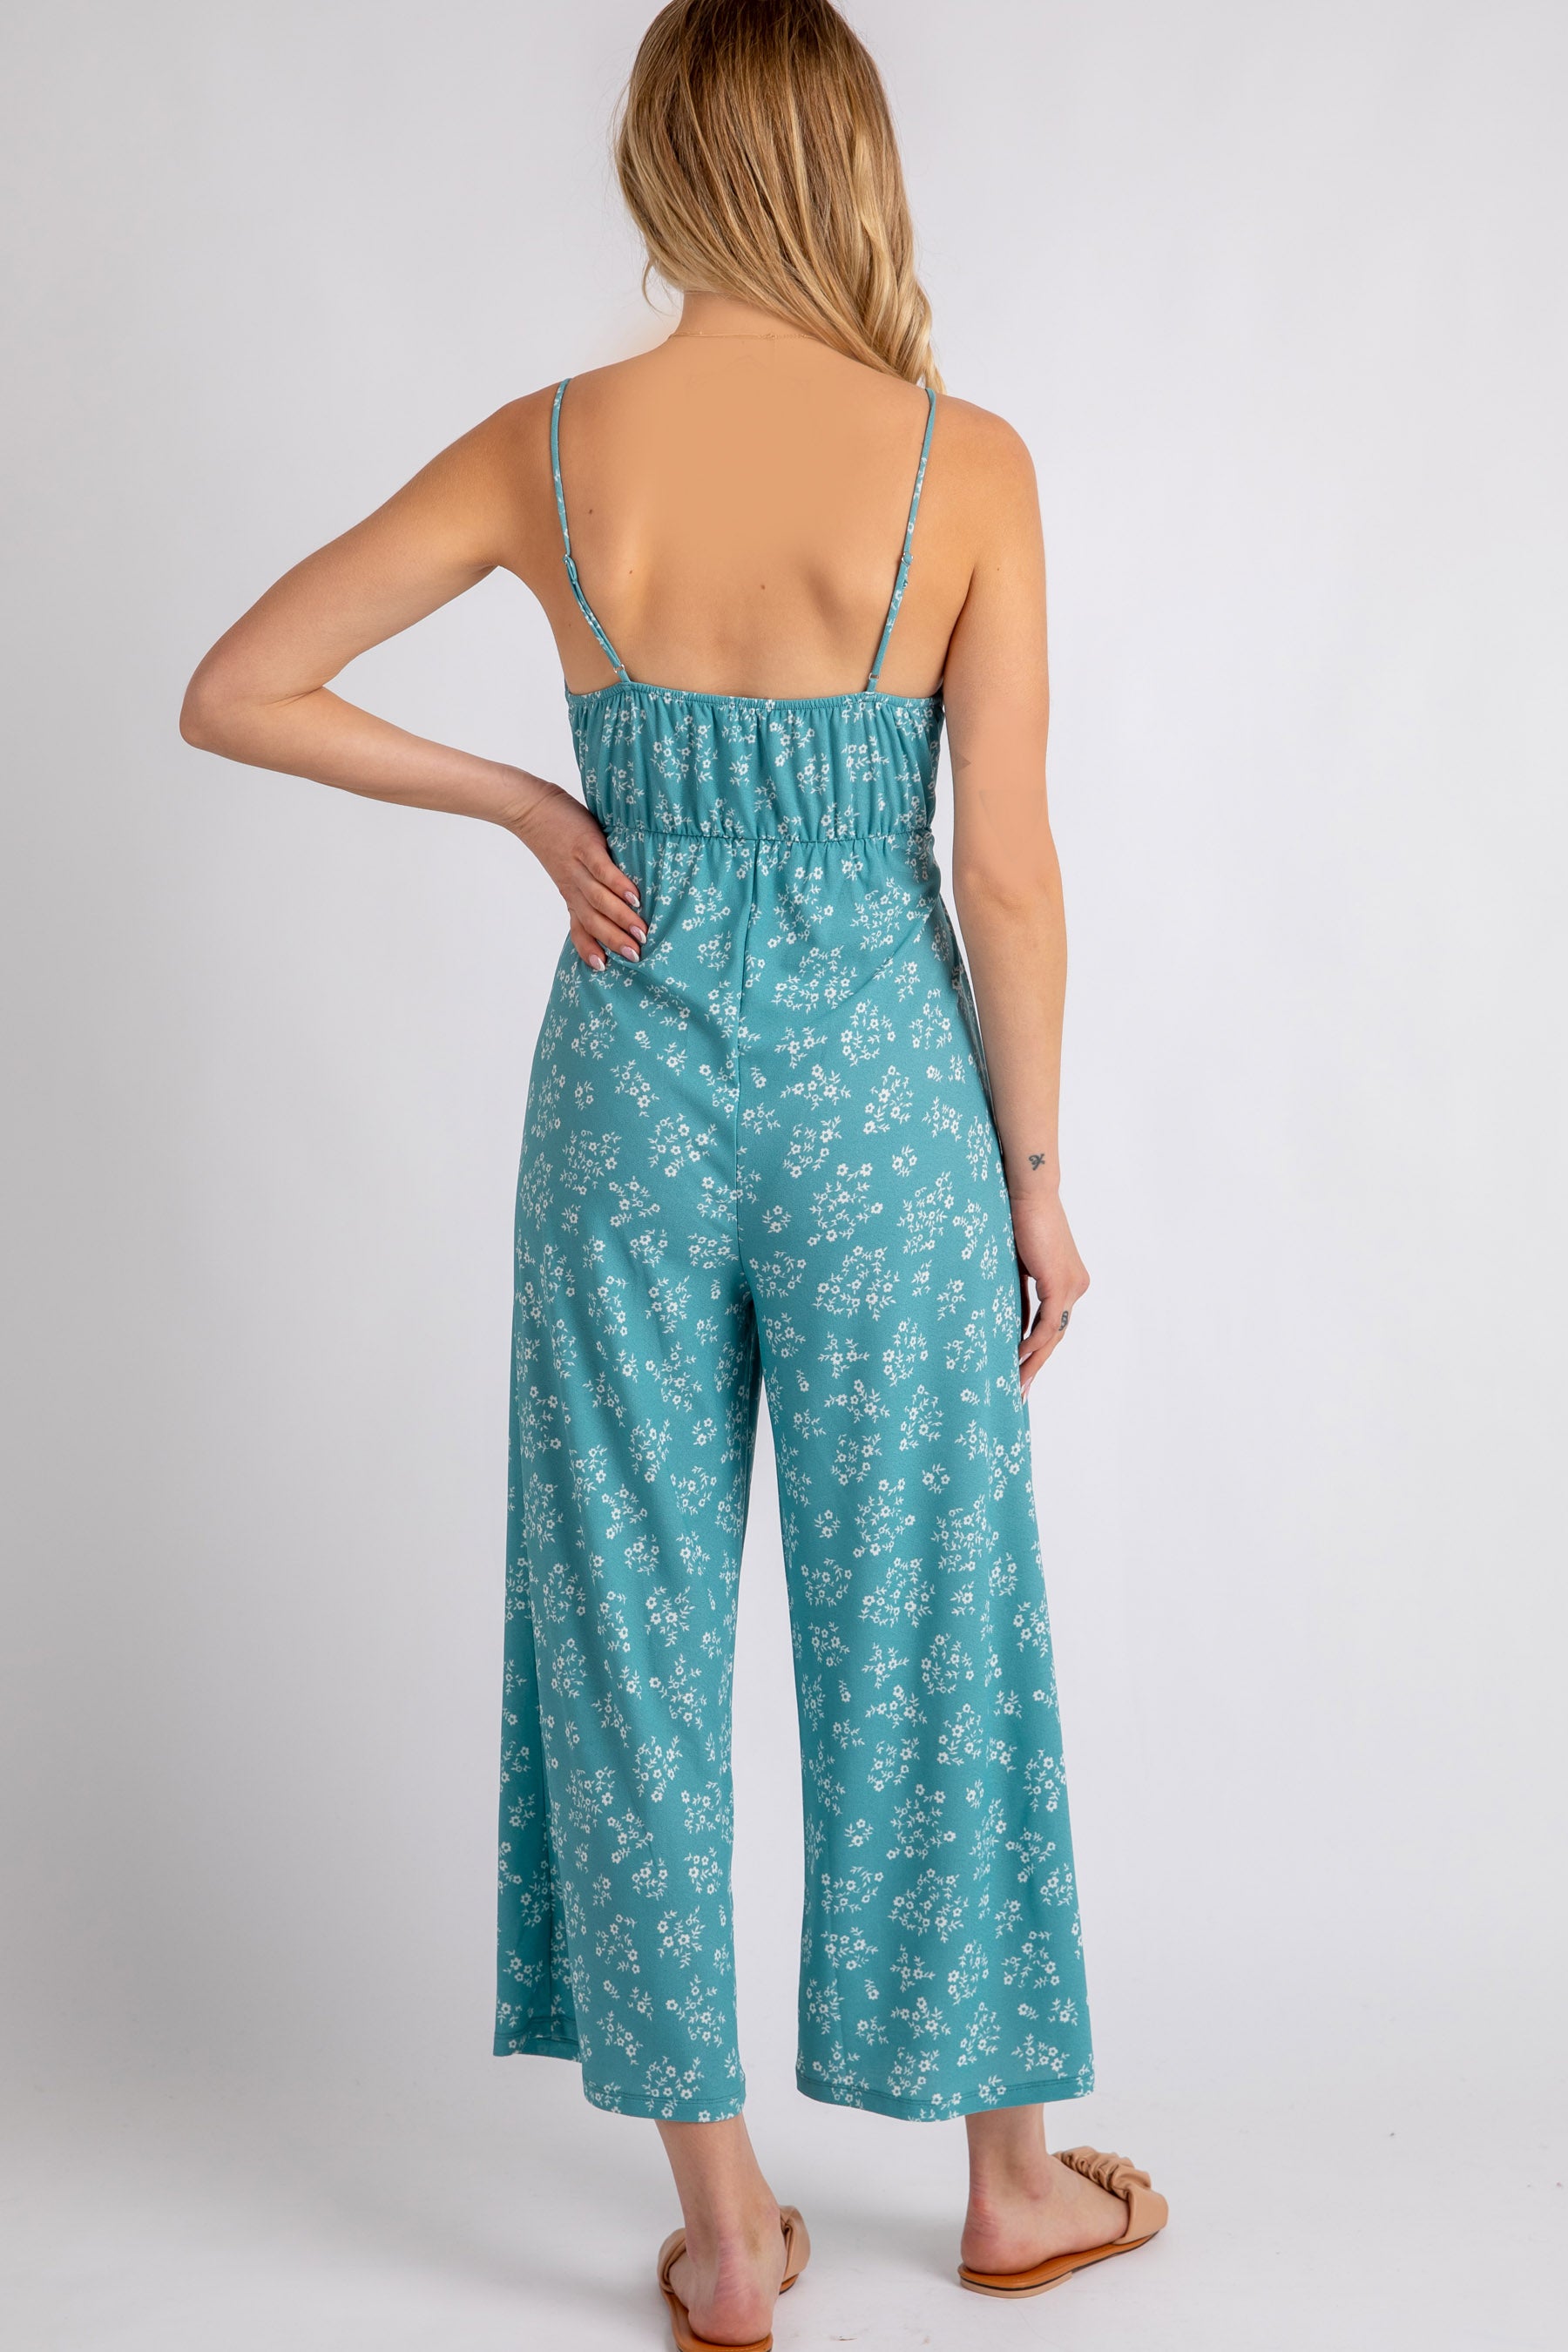 Woven Print Cami Elastic Waist Jumpsuit - LA7 ONLINE L / Mint